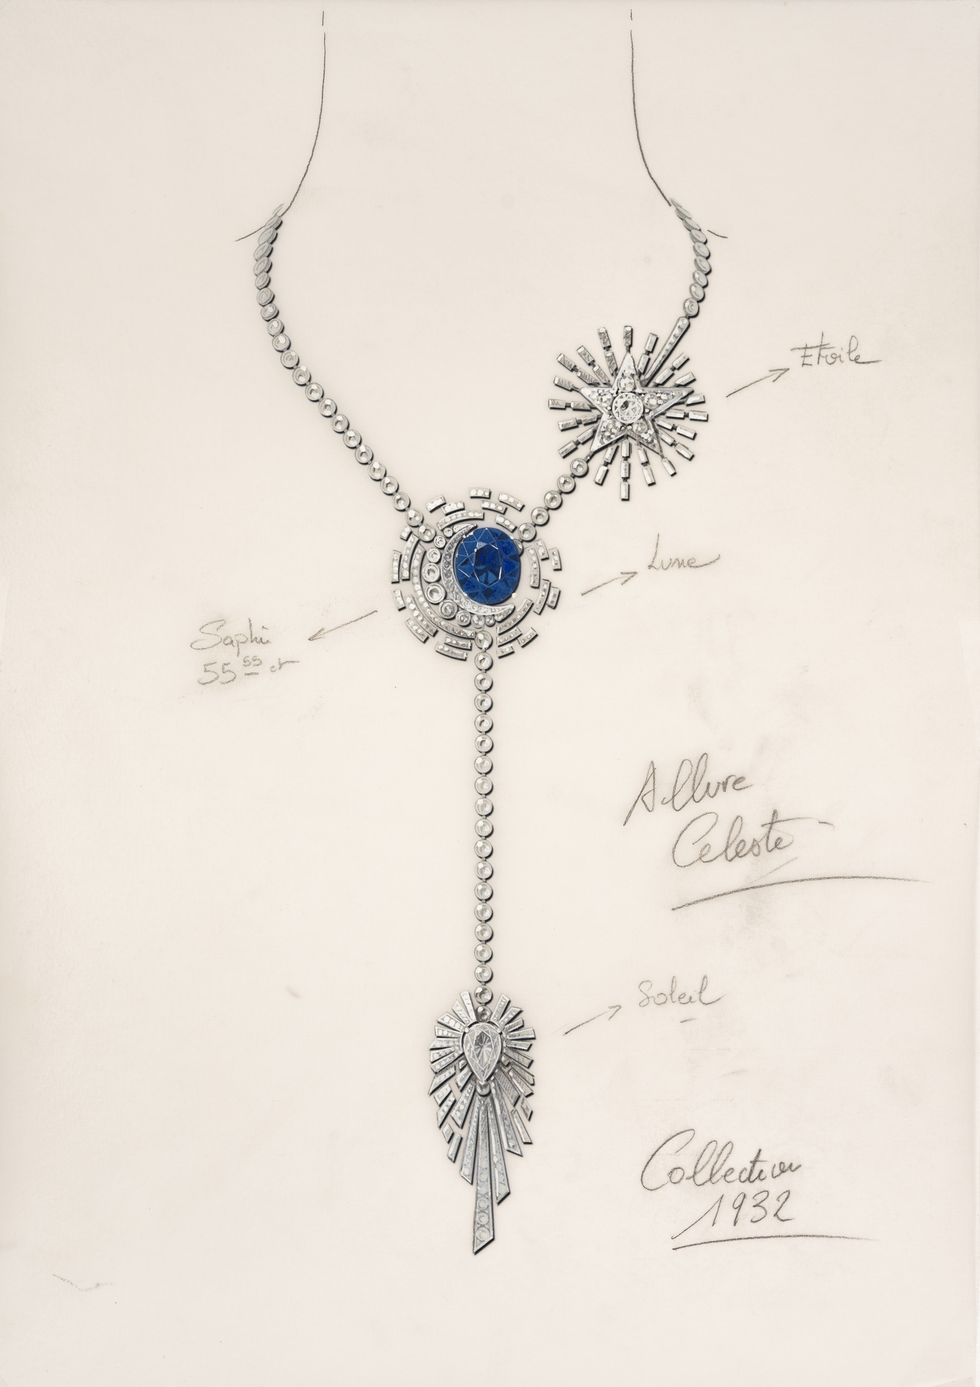 chanel 1932頂級珠寶系列 allure celeste項鍊草稿